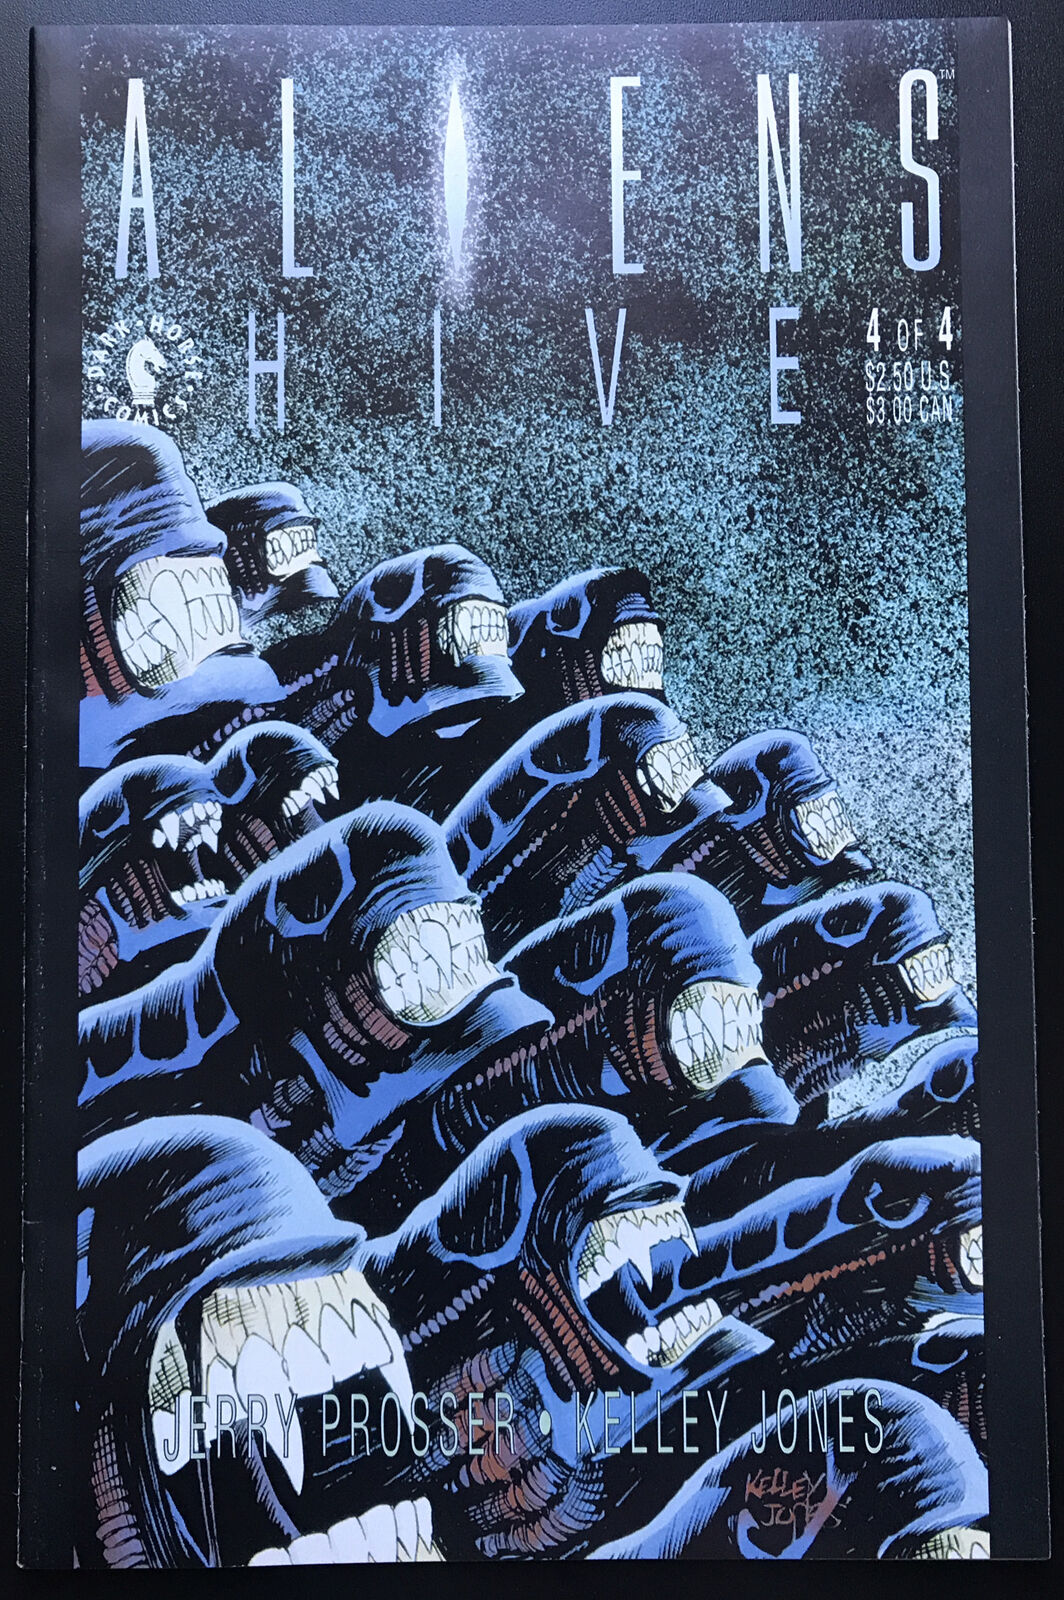 ALIENS: Hive Complete 4-Book Lot Dark Horse Comics 1992 Early Series HIGH GRADE - aliencomics.ca